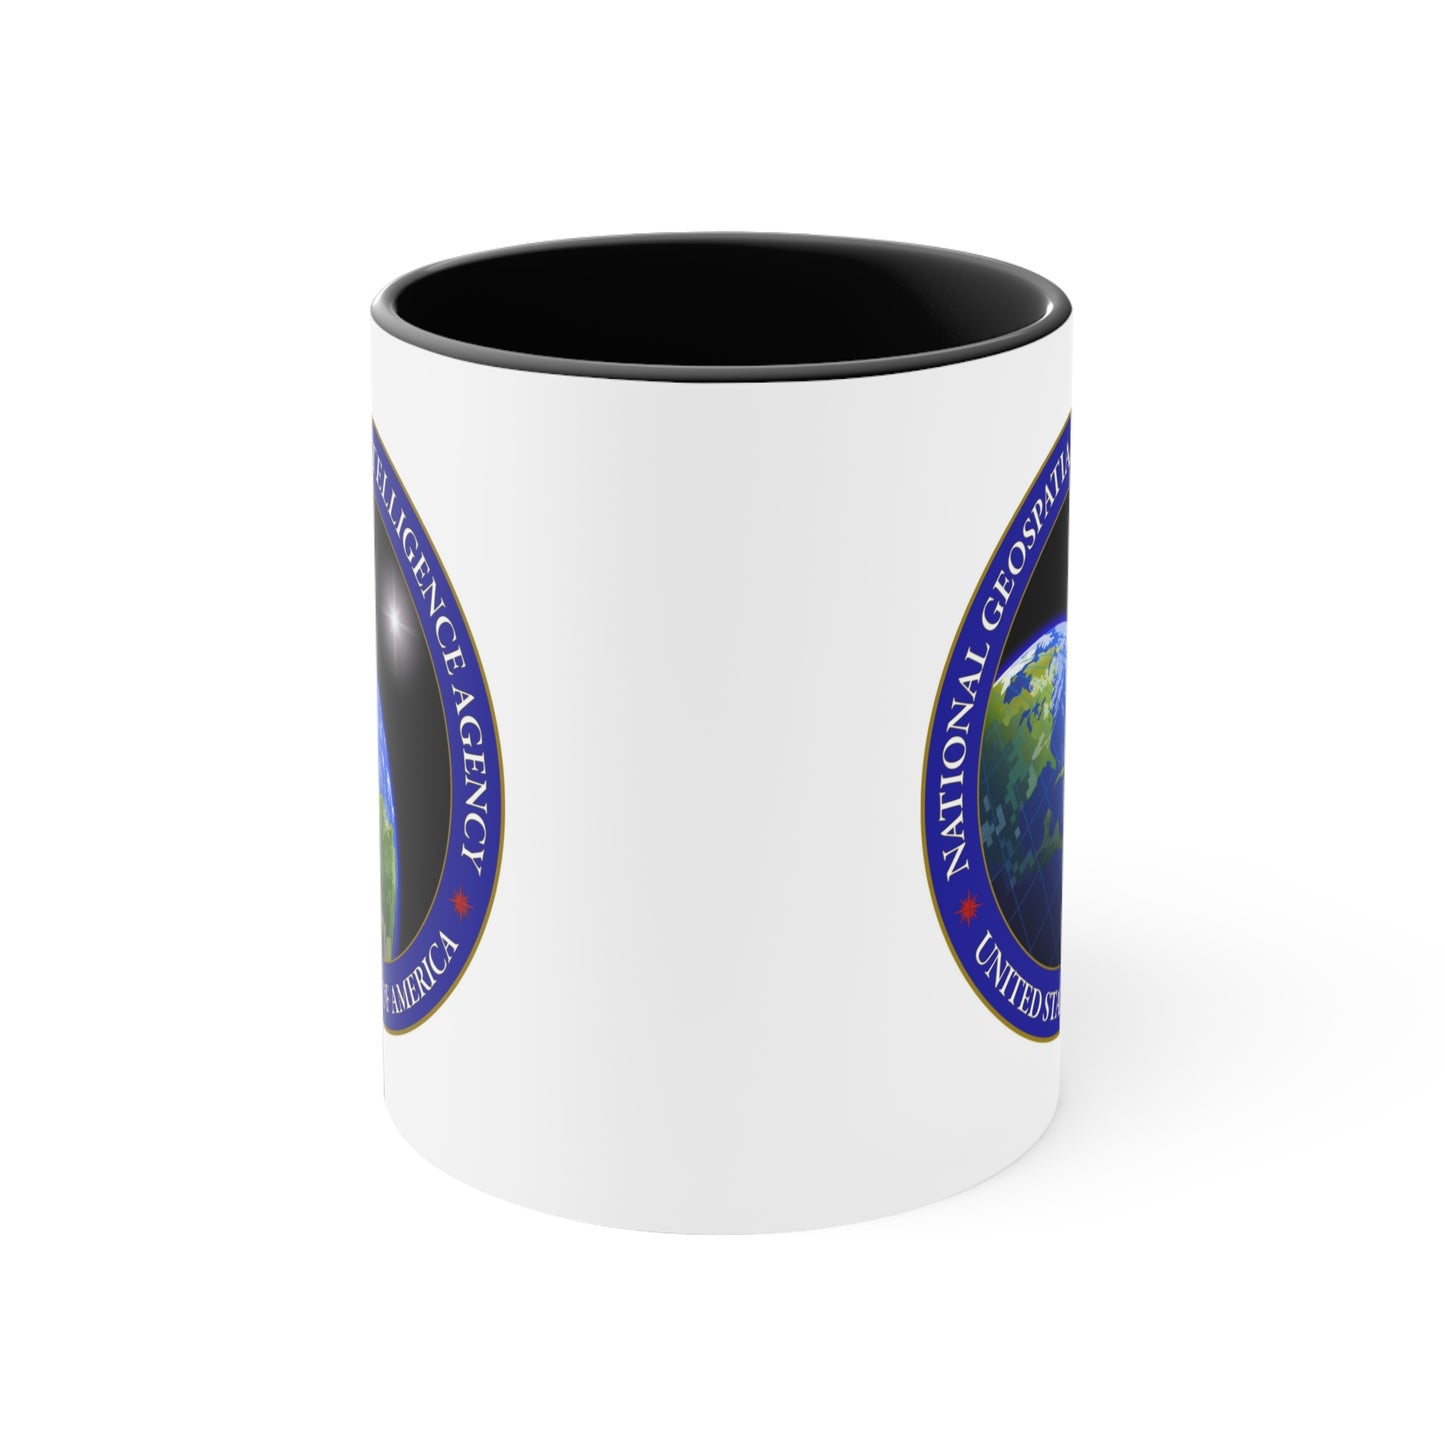 National Geospatial-Intelligence Agency Coffee Mug - Double Sided Black Accent White Ceramic 11oz by TheGlassyLass.com